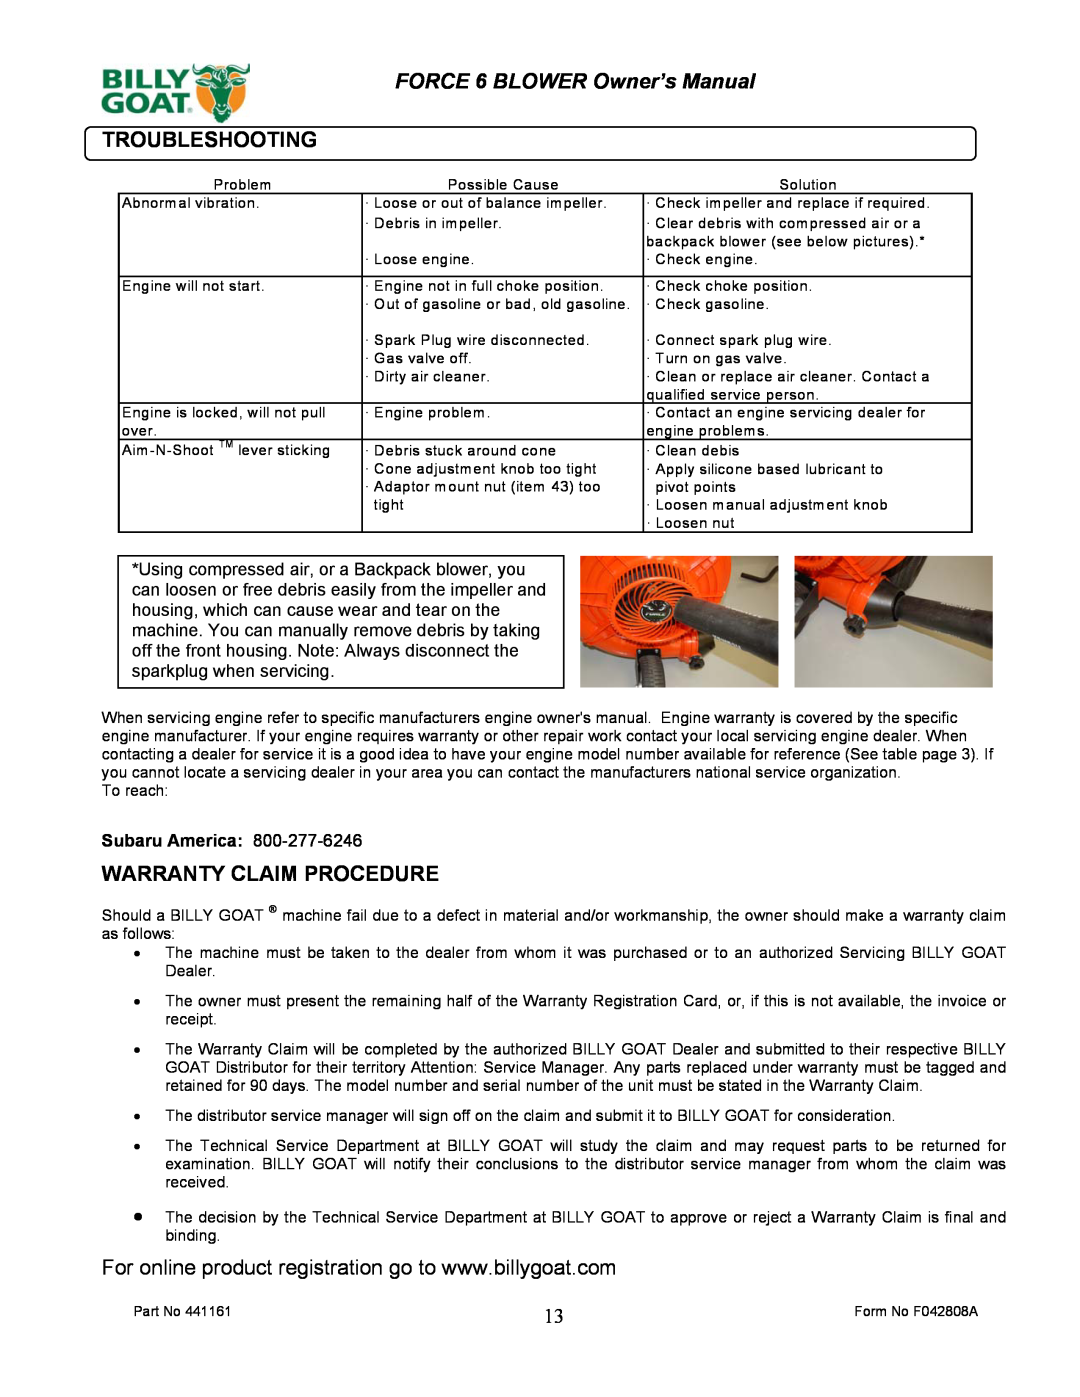 Billy Goat EX17D50012 owner manual Troubleshooting, Warranty Claim Procedure, Subaru America 